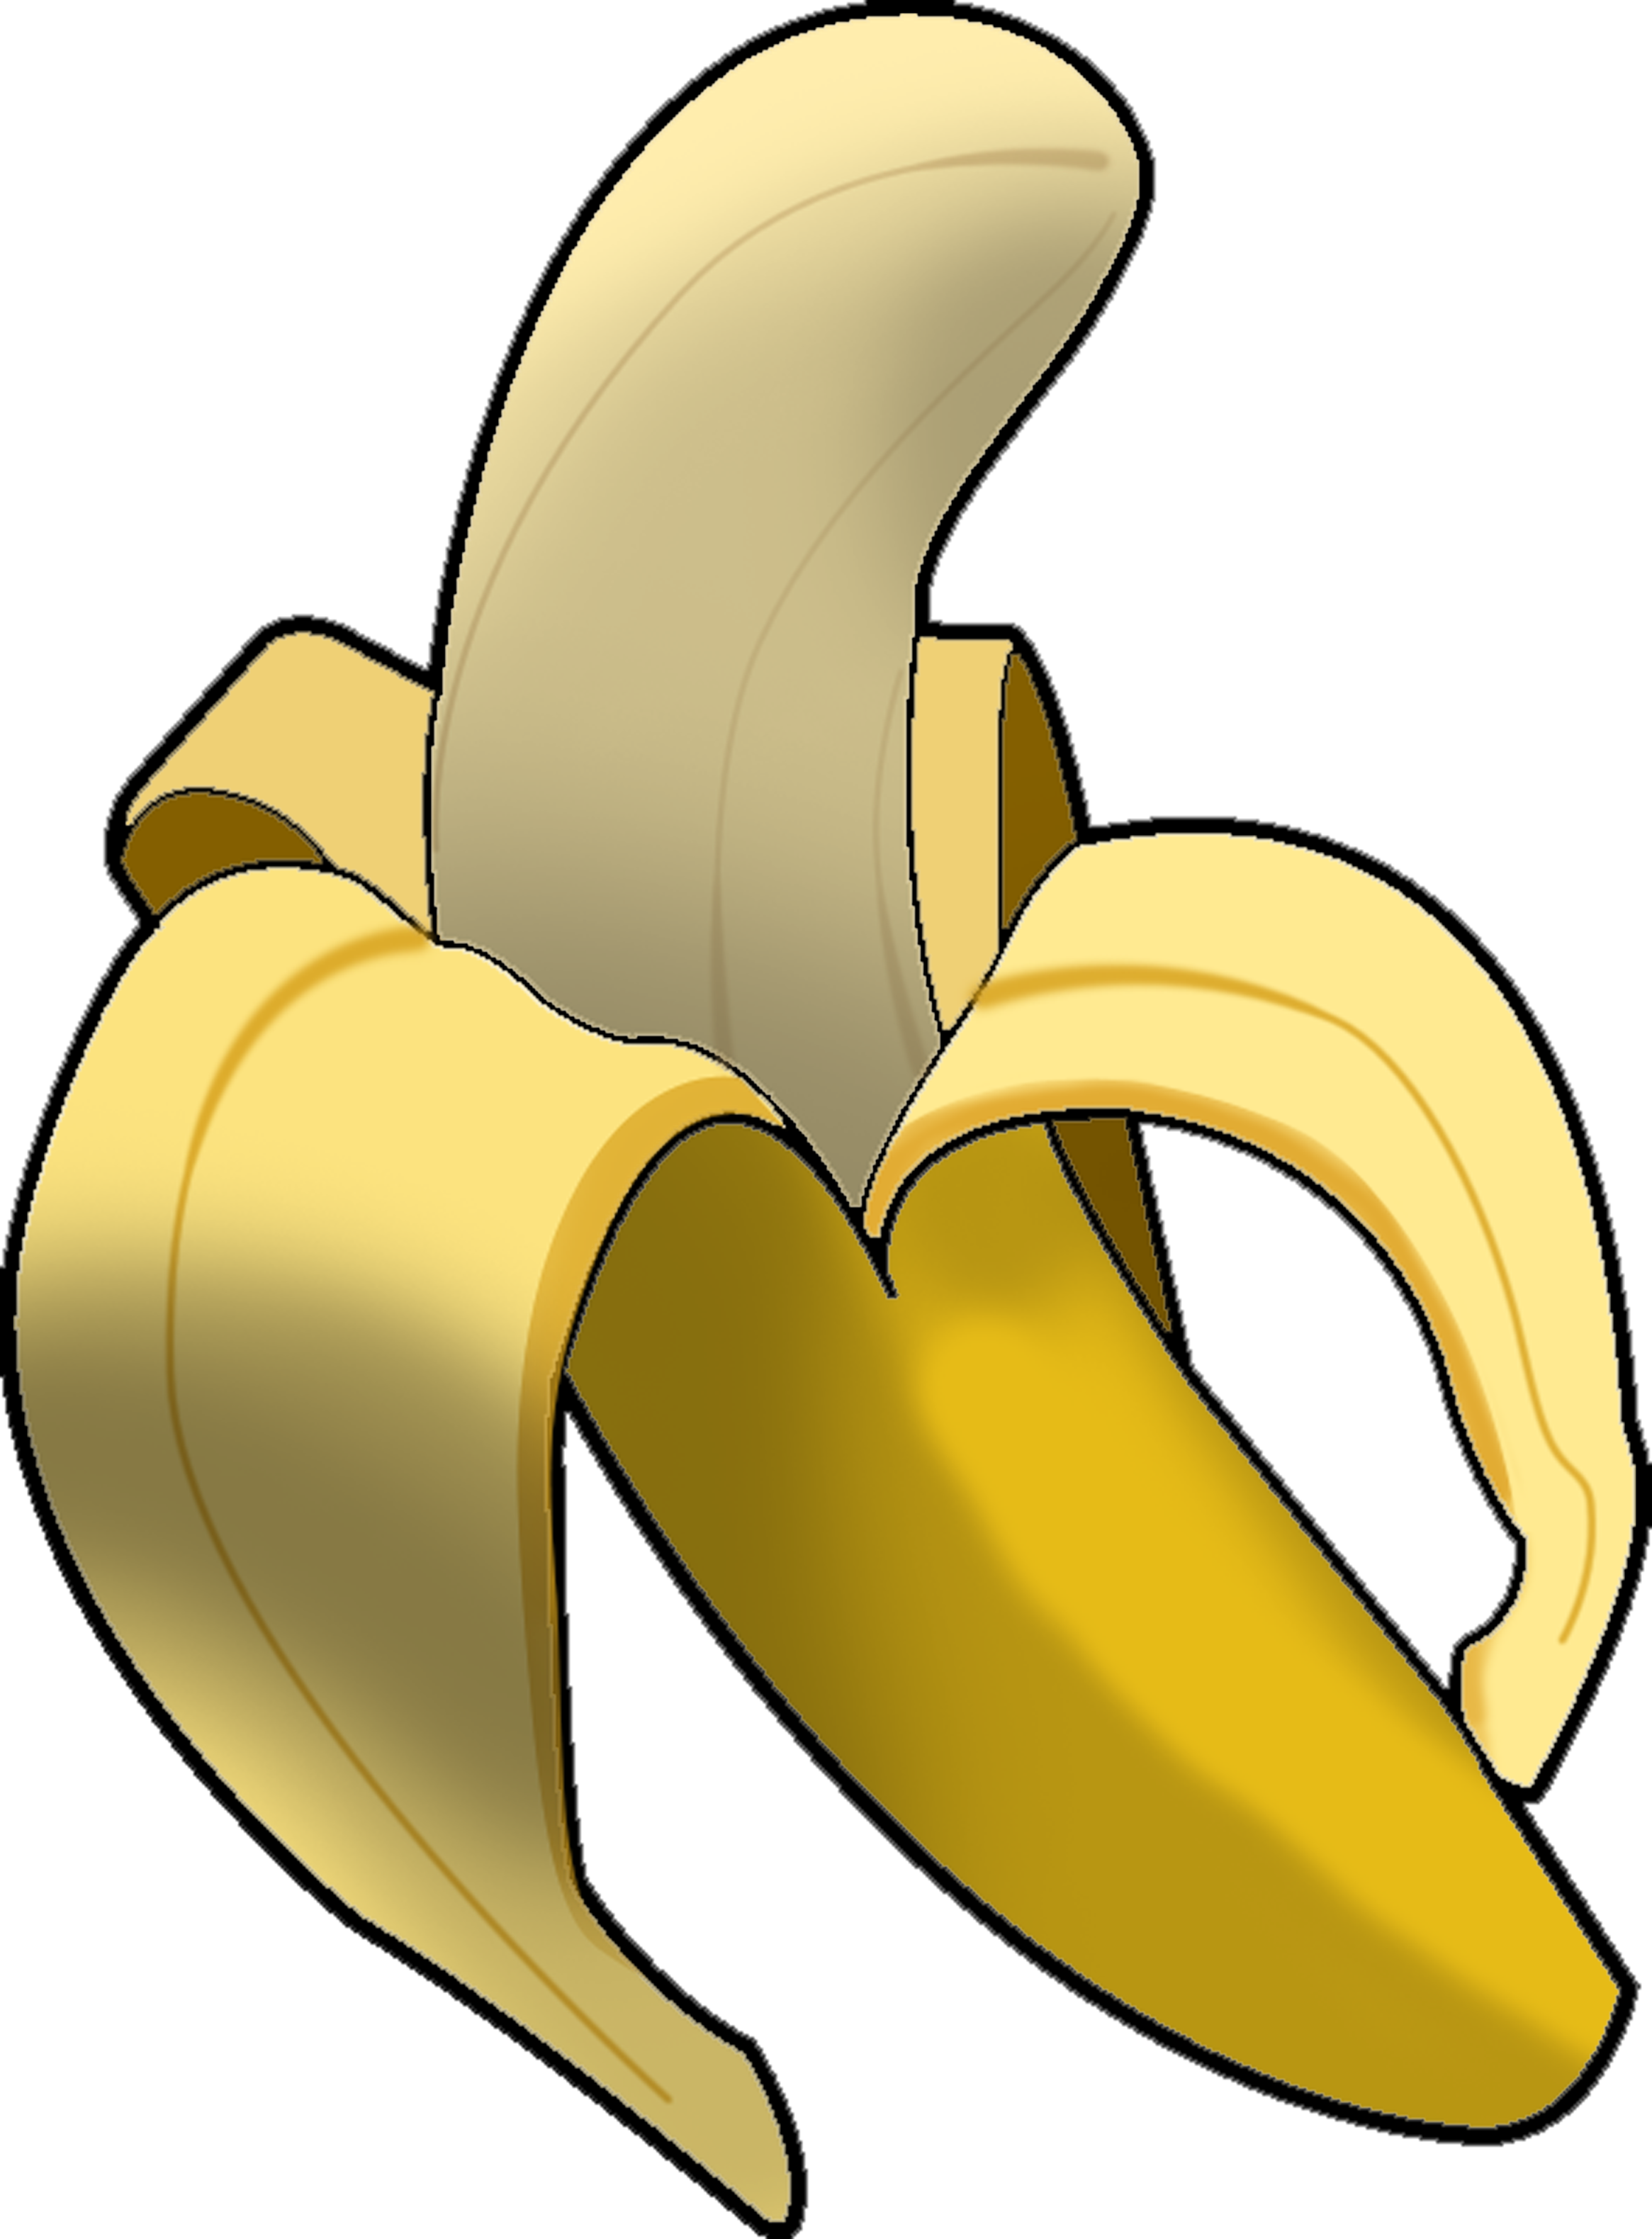 Clipart banane.